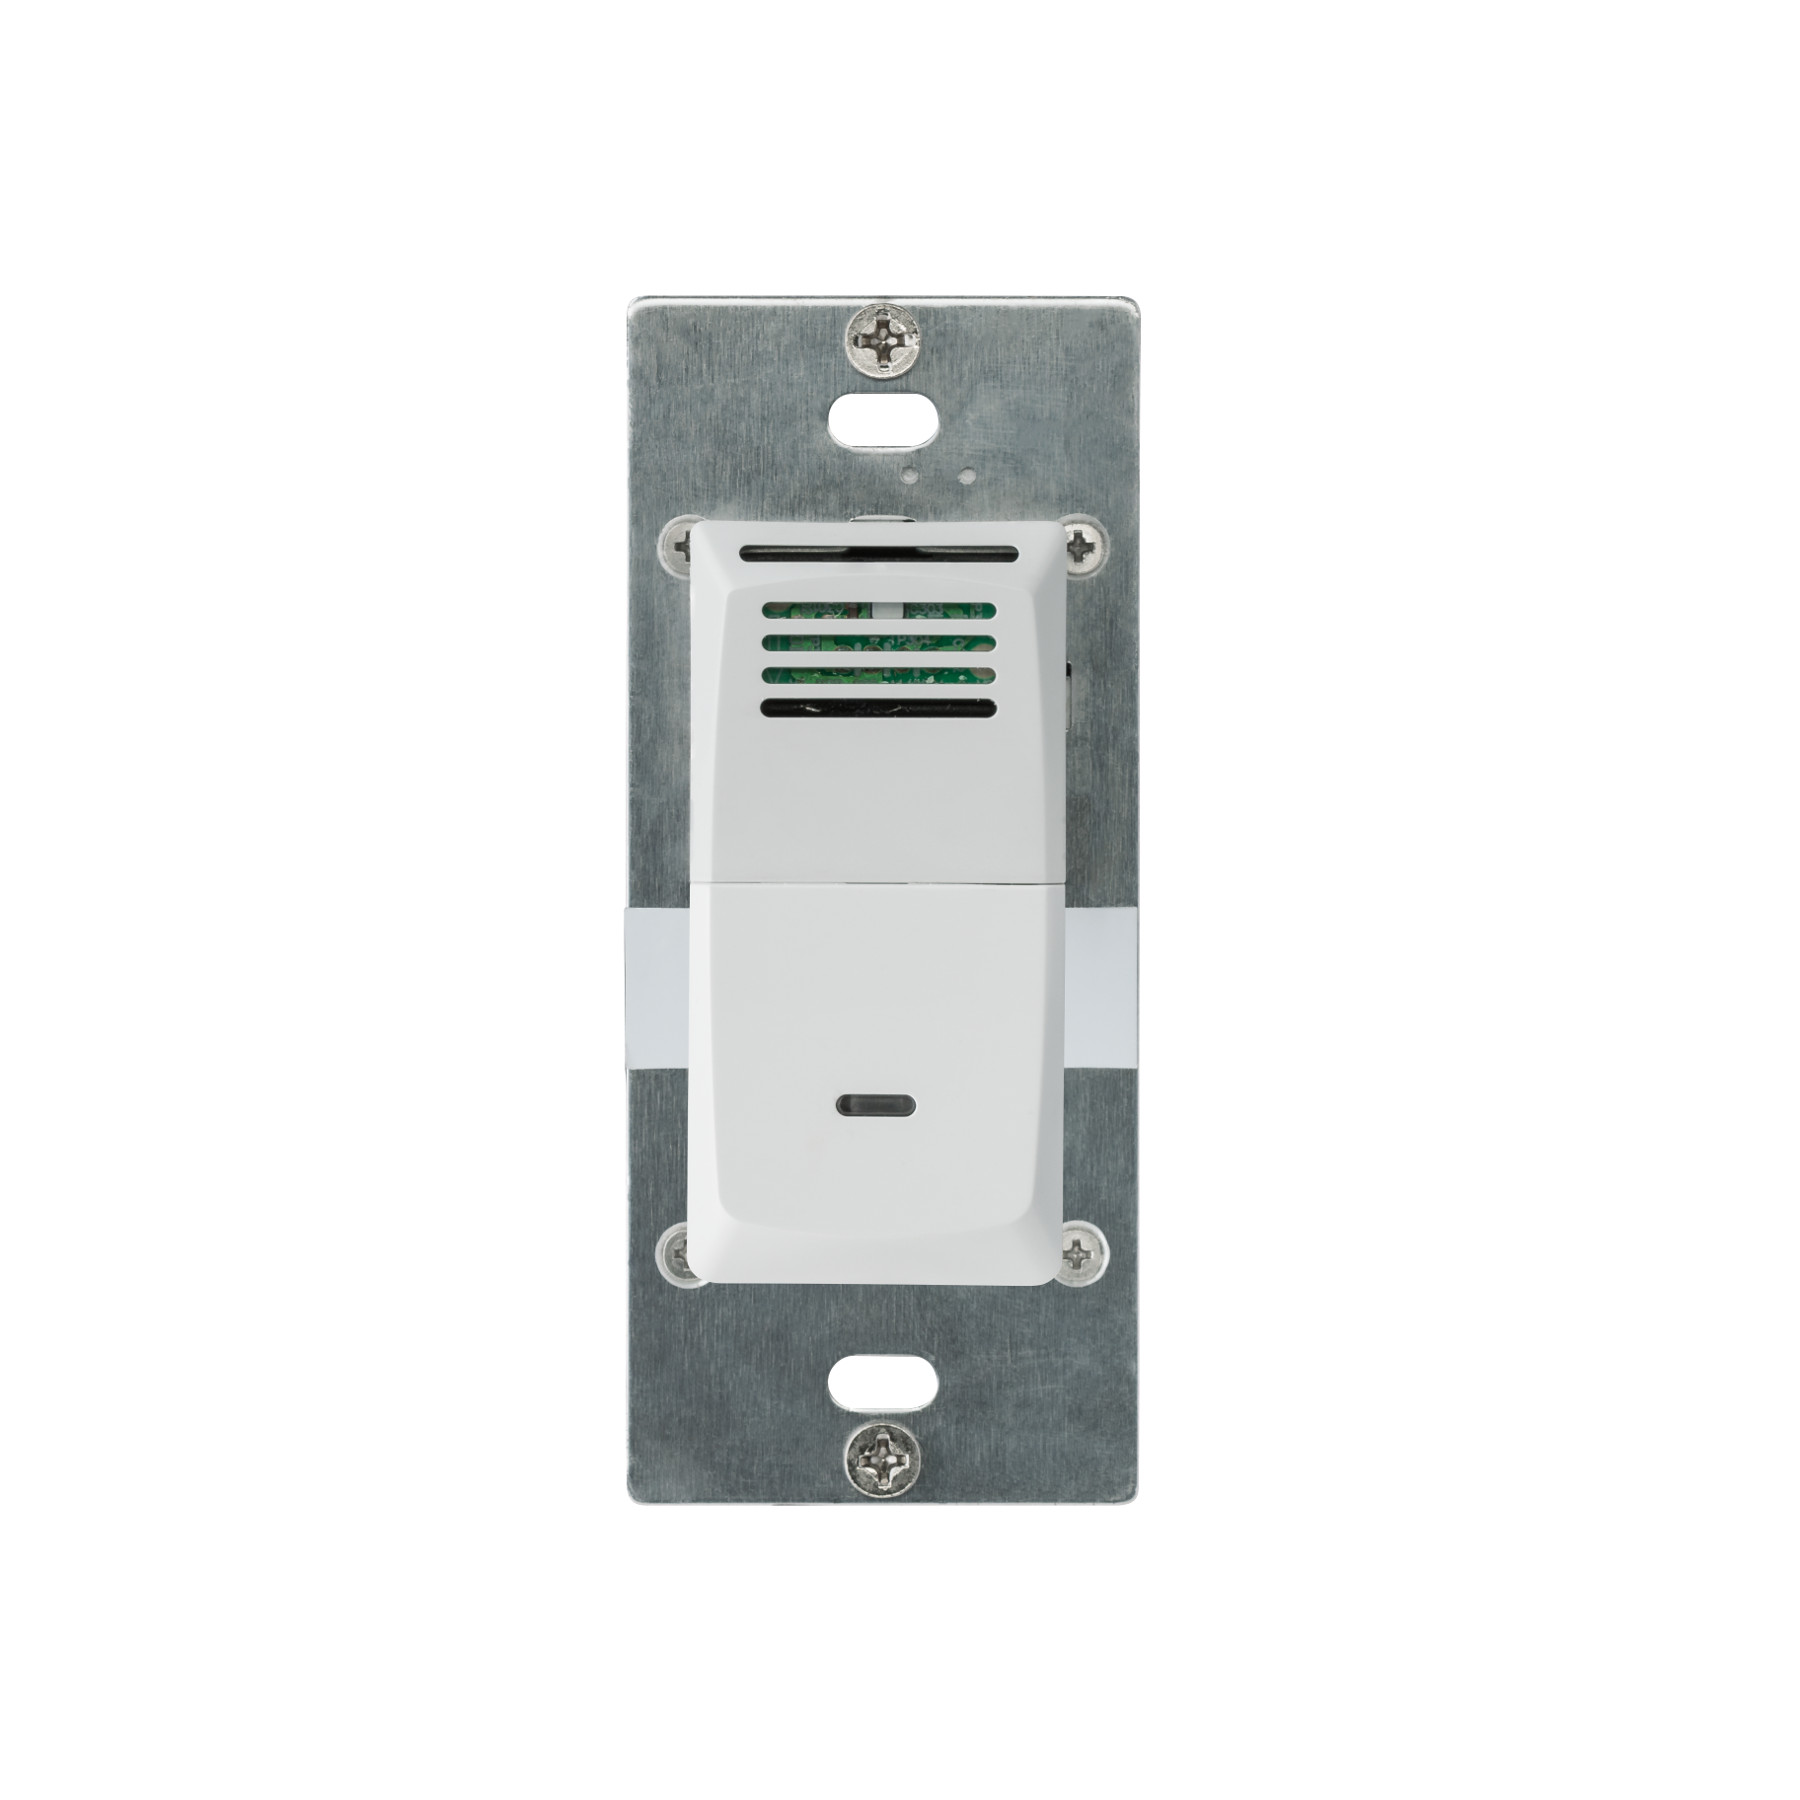 Broan-NuTone® Sensaire™ Humidity Sensing Wall Control, White, Single Pack